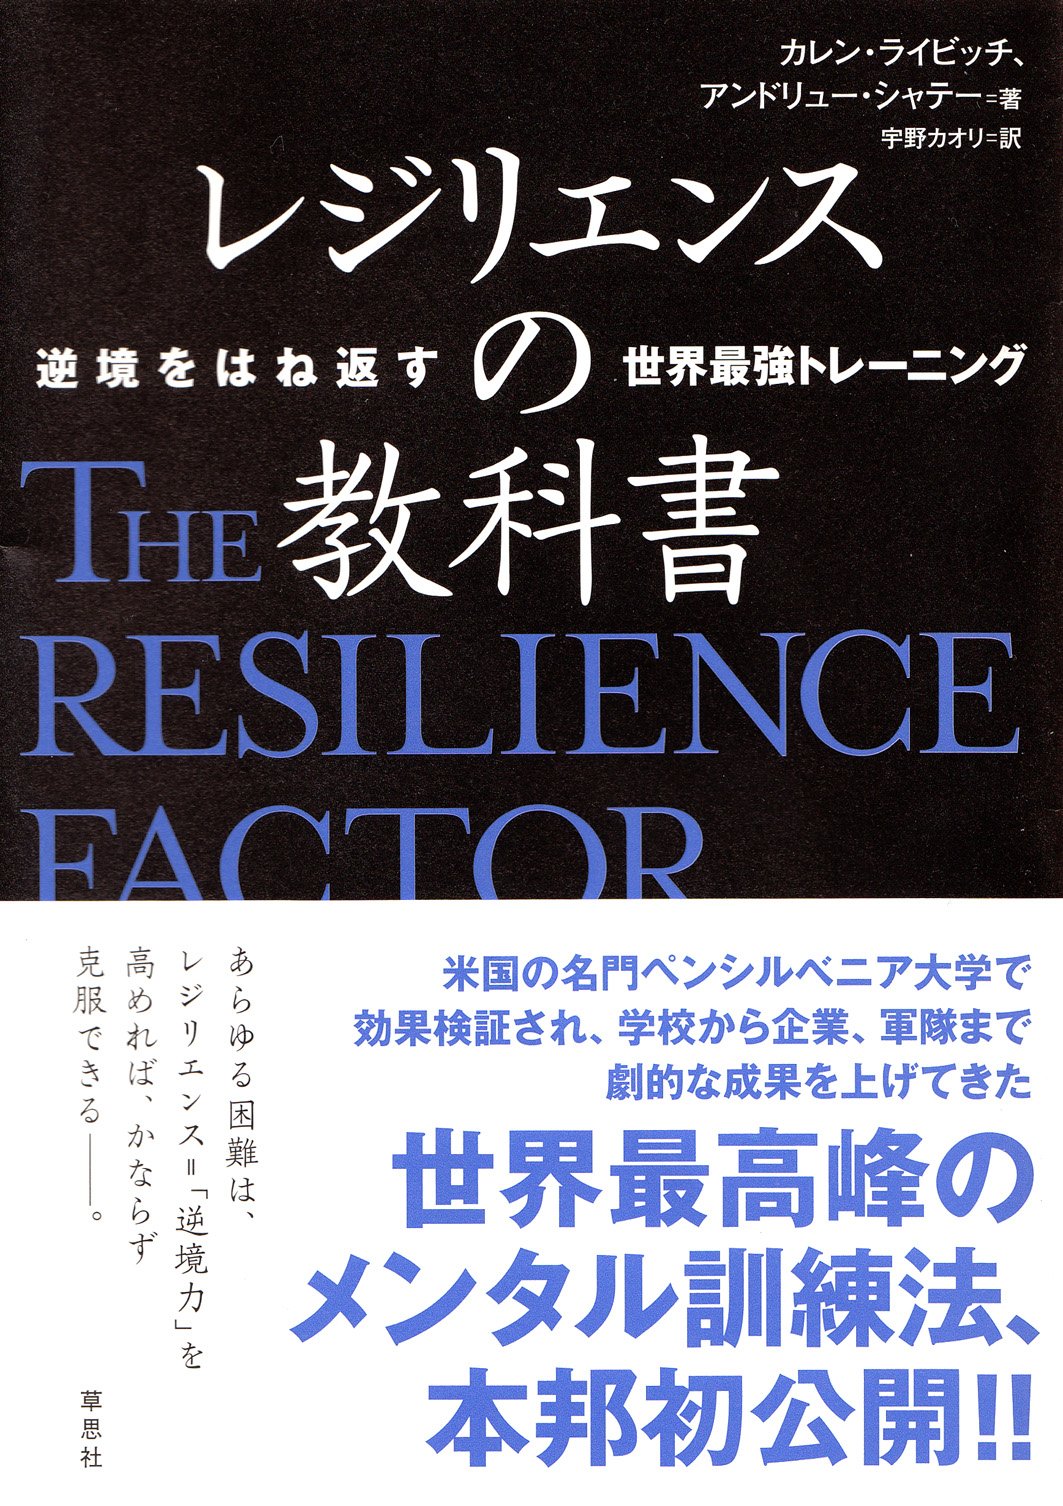 20151001_resilience no kyokasho.jpg